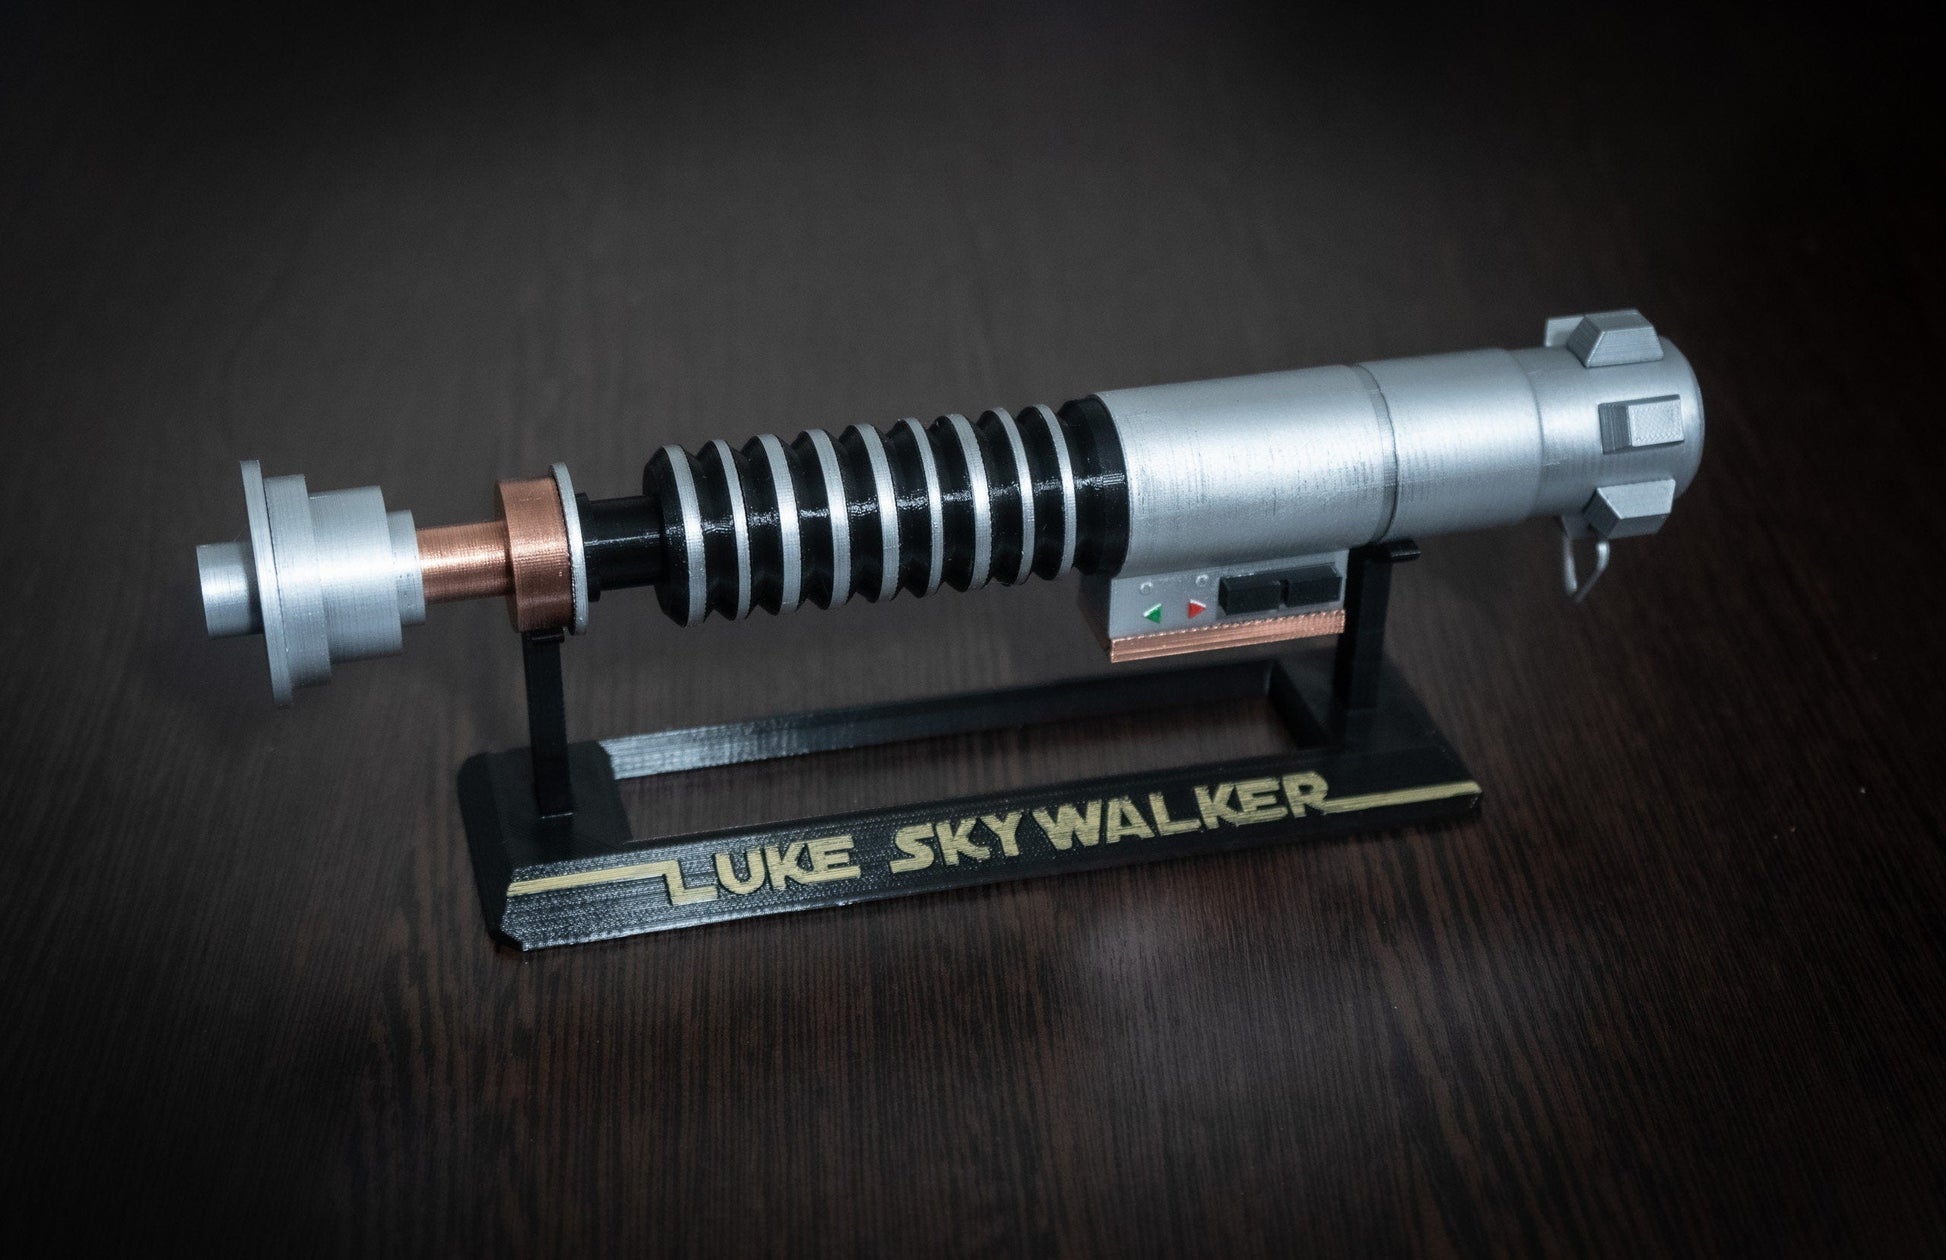 Luke Skywalker lightsaber hilt | Star Wars cosplay custom lightsaber replica | Star Wars gift - 3DPrintProps